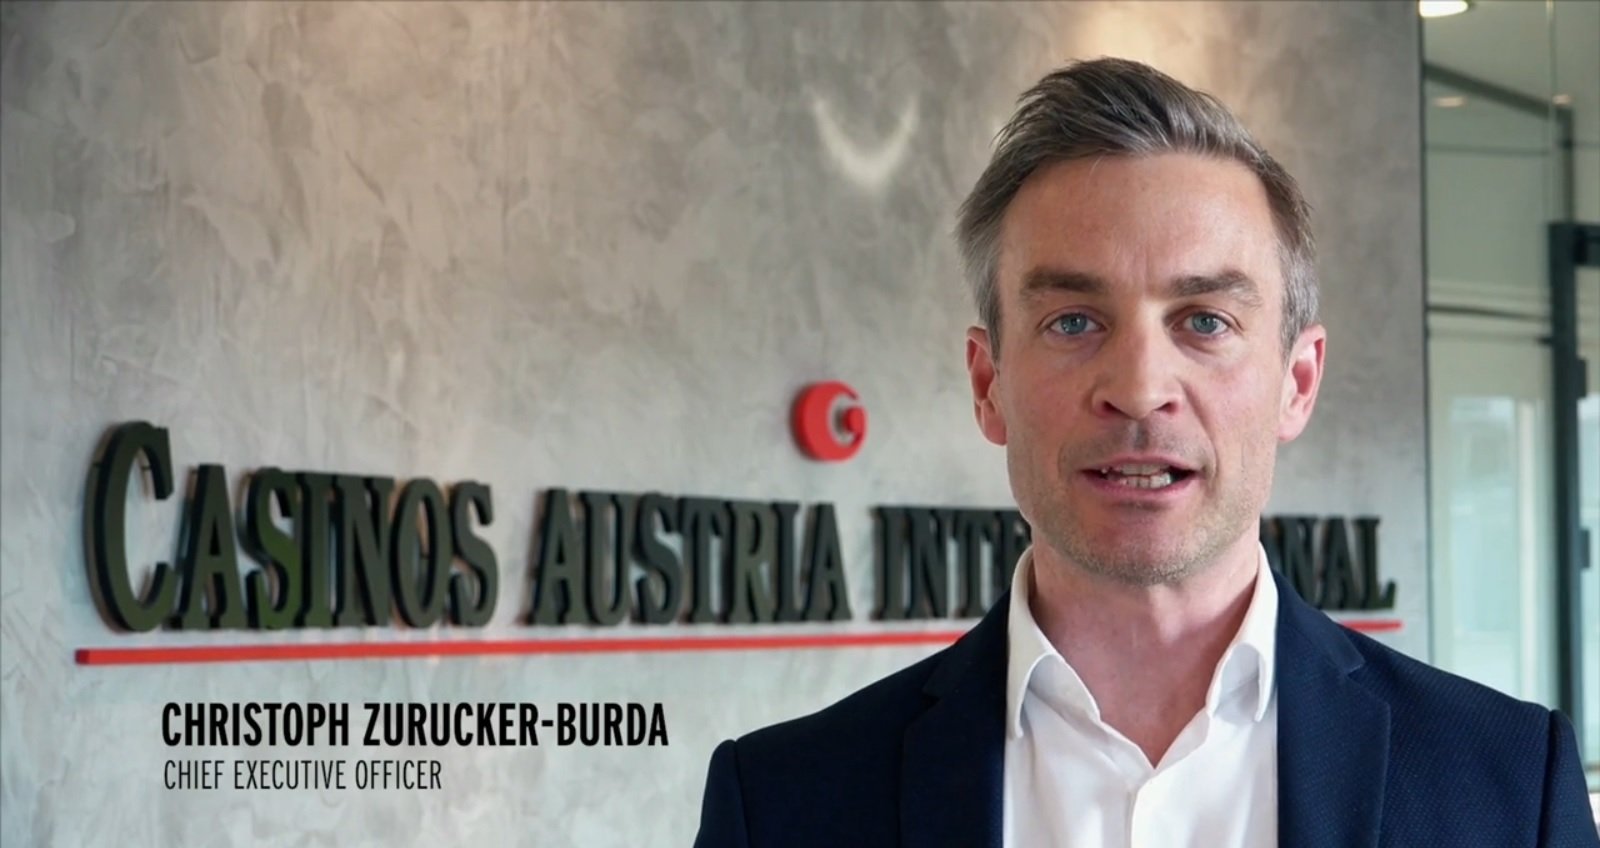 Casinos Austria International CEO Christoph Zurucka-Burda